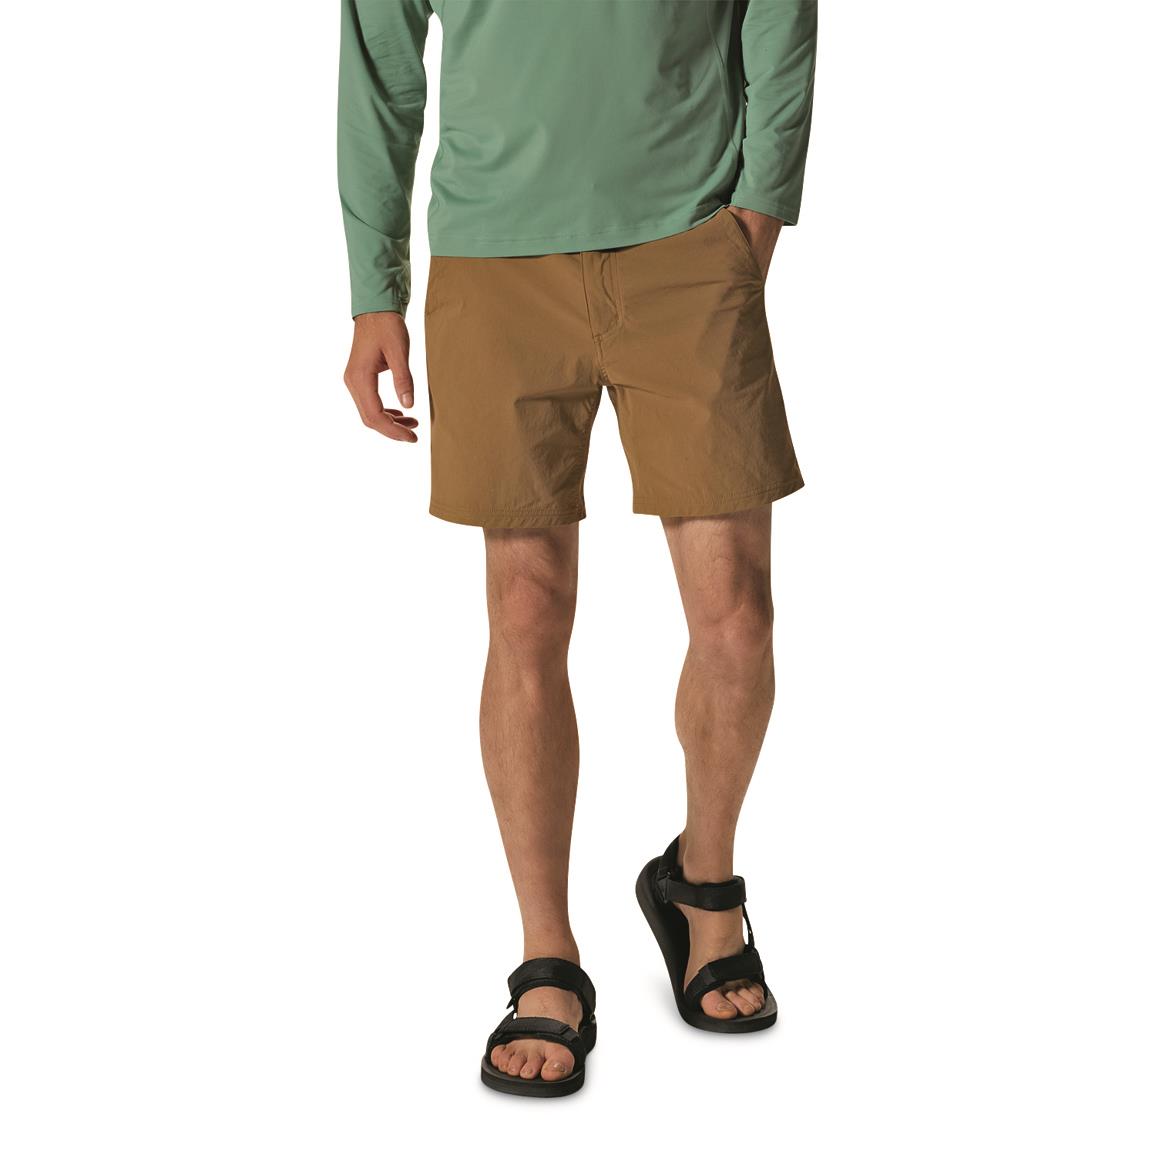 Mountain Hardwear Men's Basin Trek Shorts, Corozo Nut